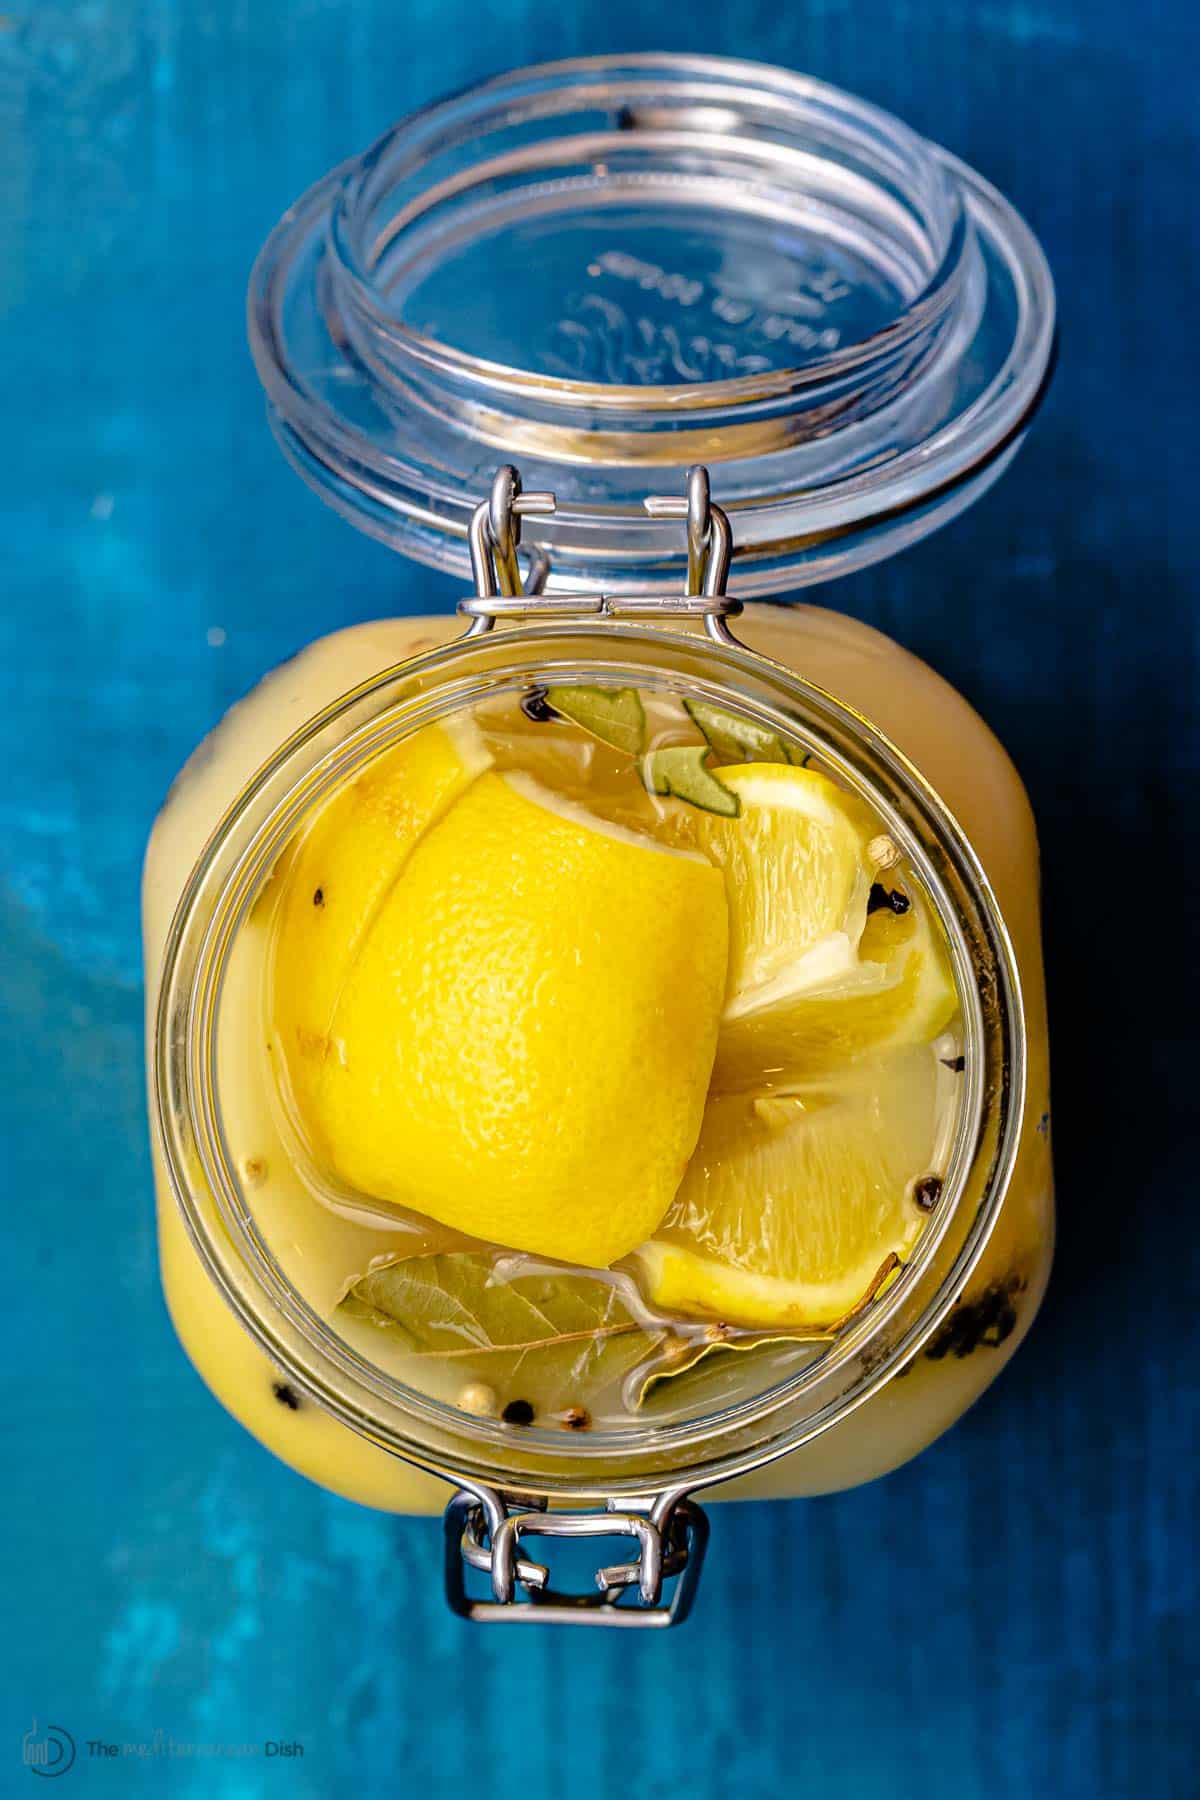 https://www.themediterraneandish.com/wp-content/uploads/2021/02/preserved-lemons-recipe-3.jpg